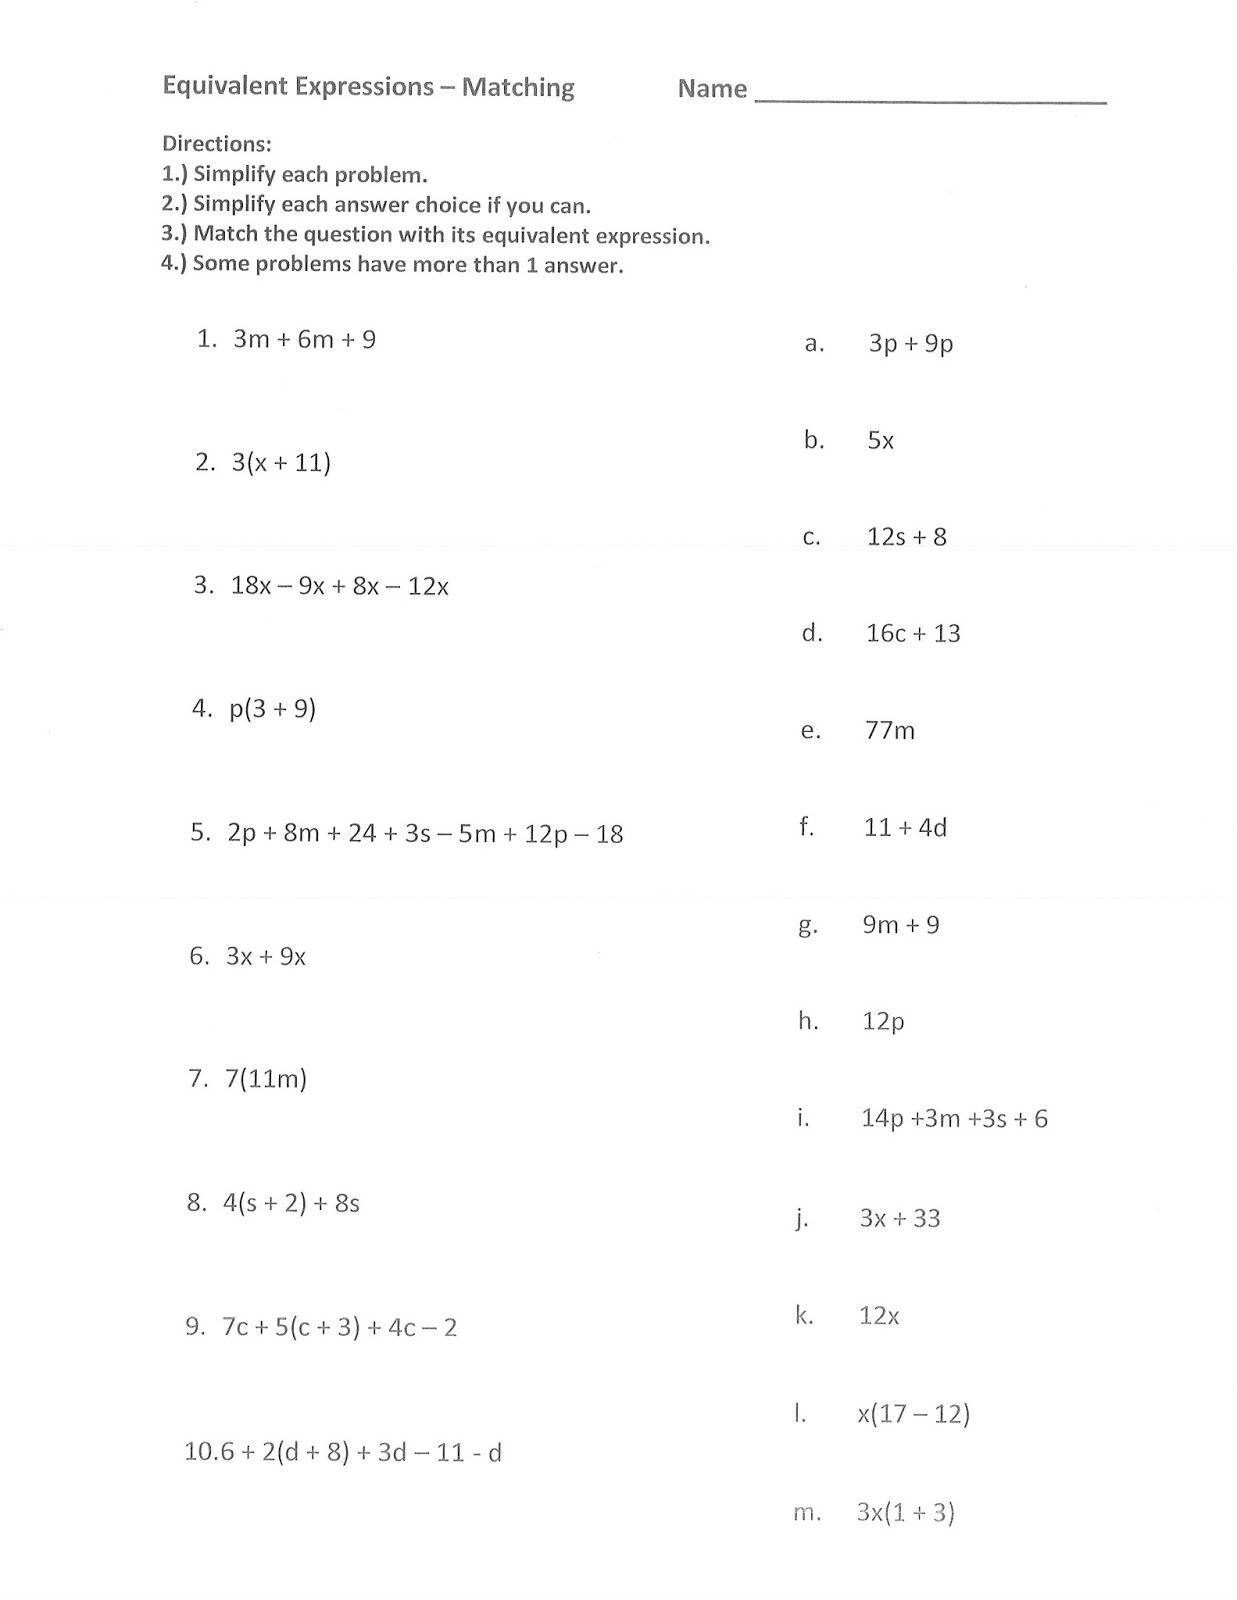 Equivalent Expressions Worksheet  Soccerphysicsonline Pertaining To Equivalent Expressions Worksheet